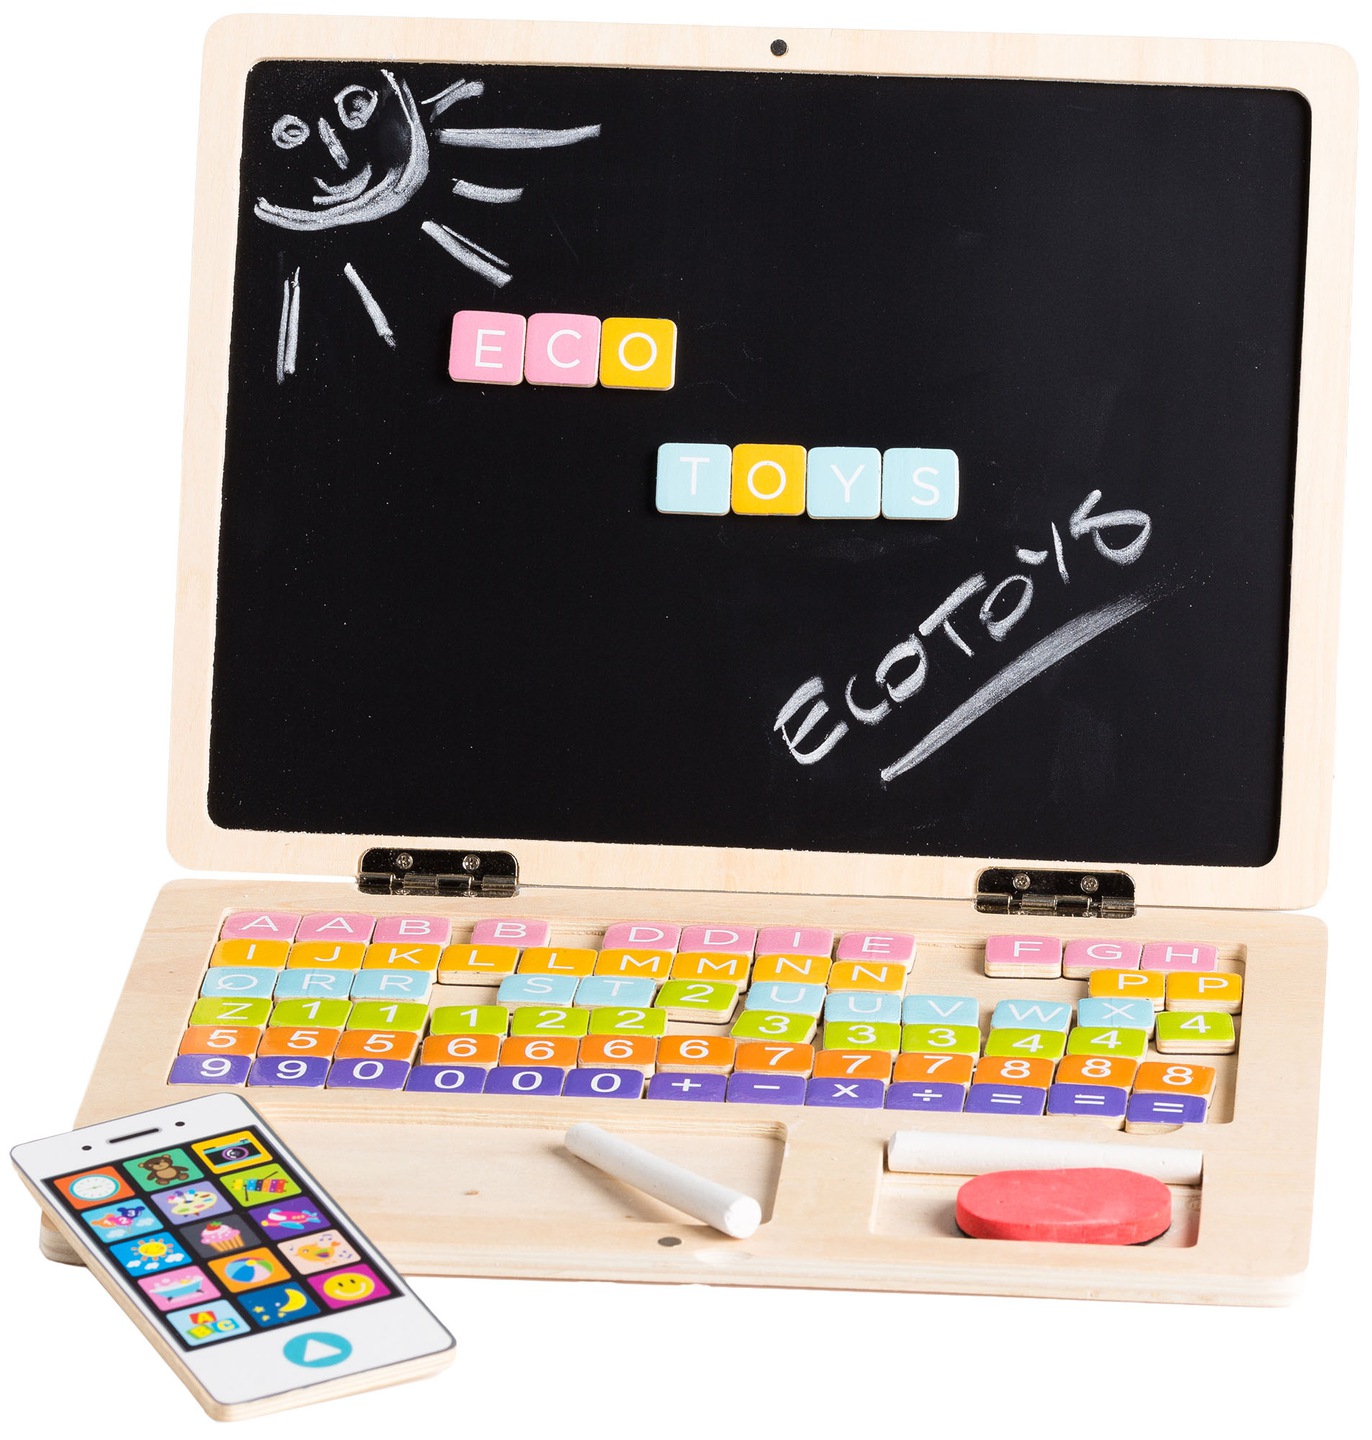 Tablita Interactiva stil Laptop din Lemn cu Telefon 2 IN 1 IDL, JUNIOR BUSINESSMAN, Contine 78 de Elemente Magnetice in culori vii, Numere, Litere si Simboluri Matematice cu Rol in Dezvoltarea Socio-Emotionala si Cognitiva